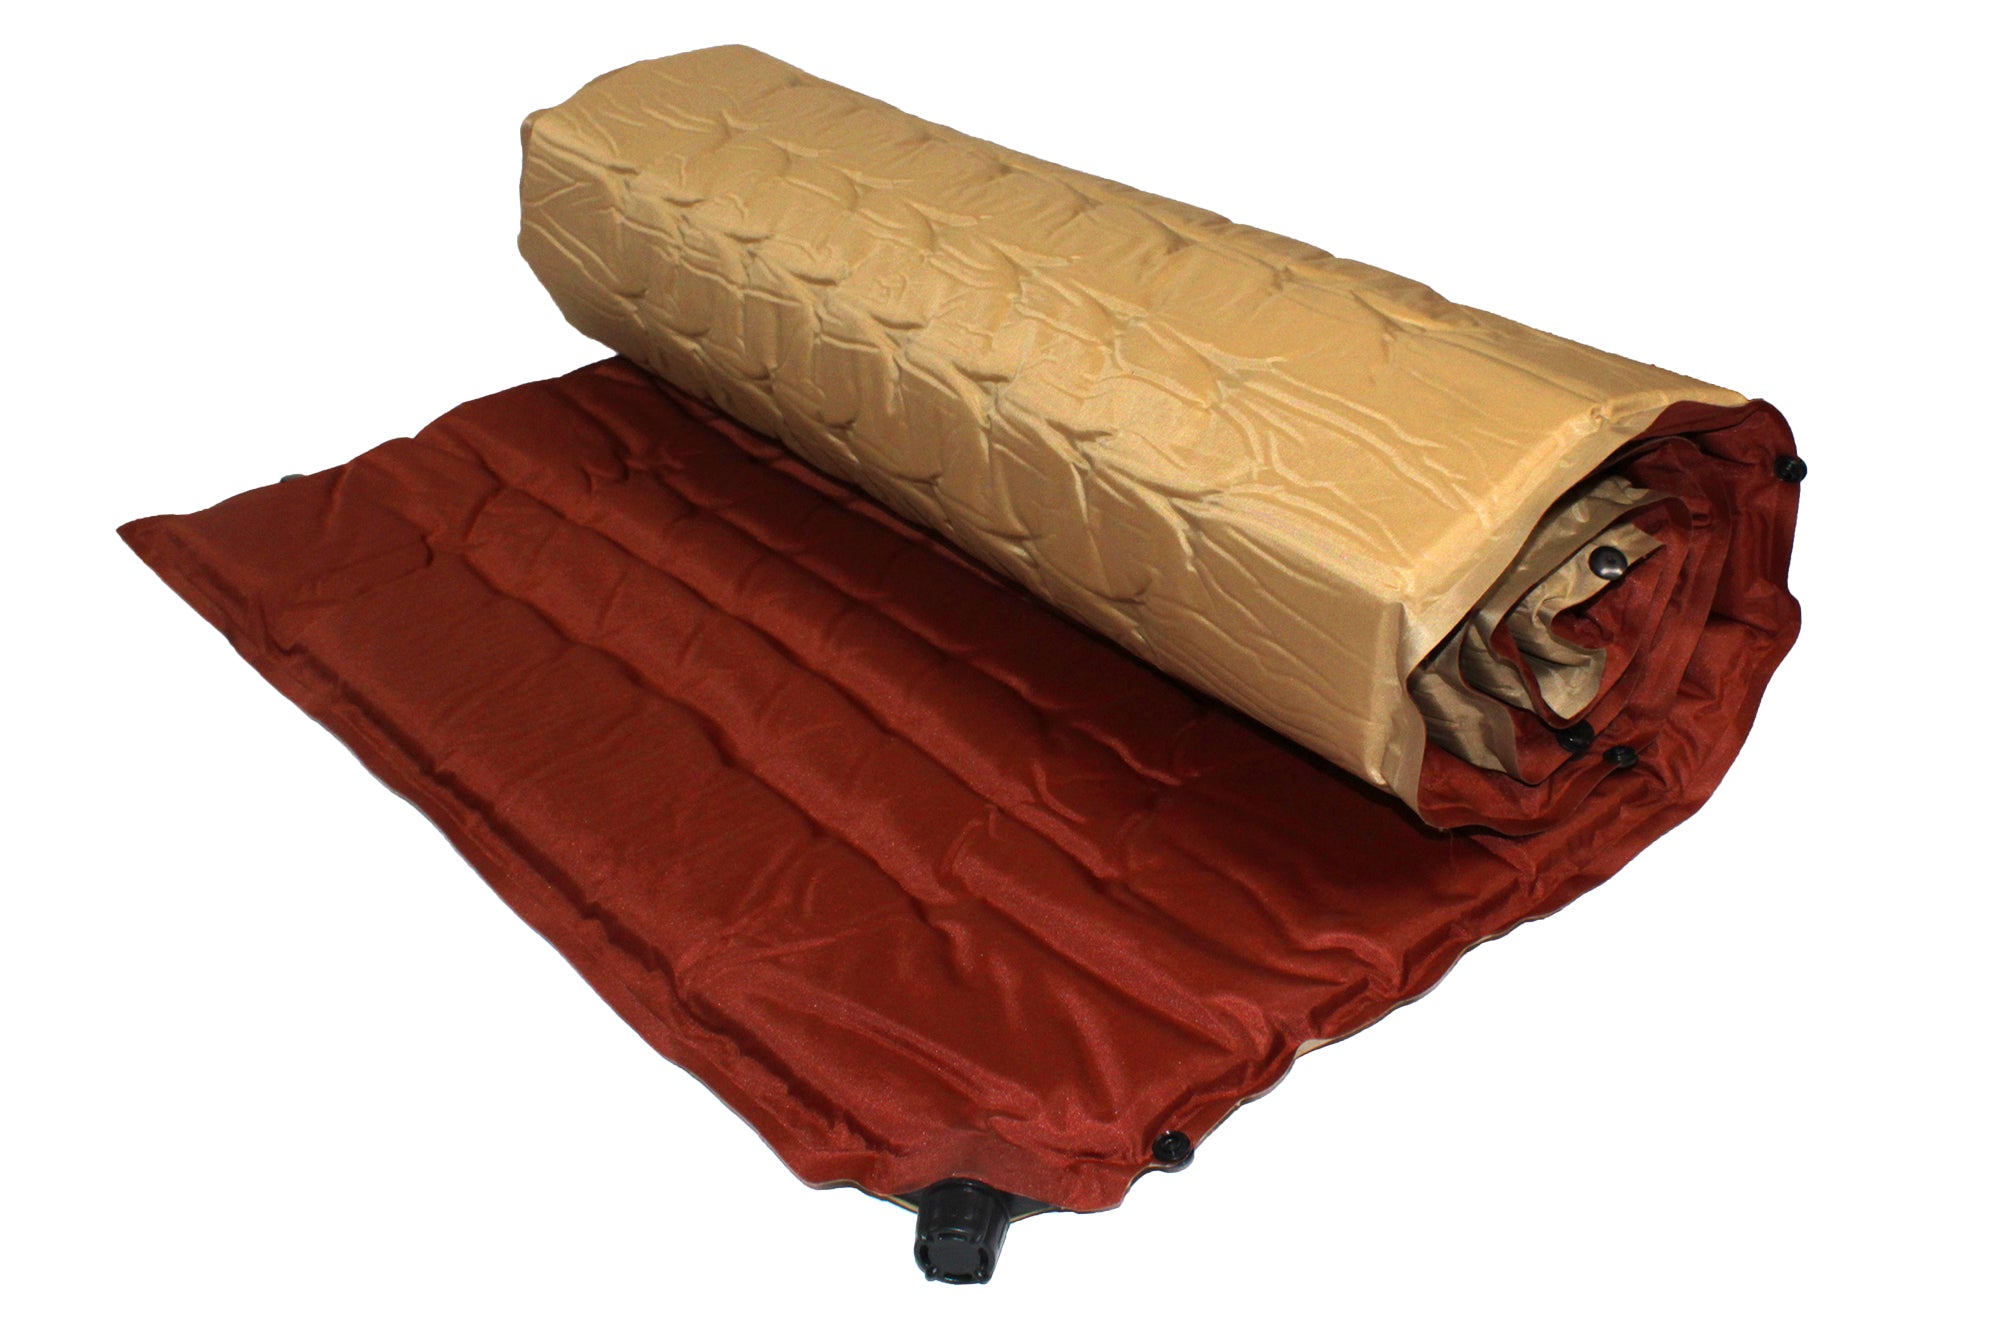 184x60cm Ultralight Self-Inflating Foam Waterproof Camping Mattress with Carry Bag